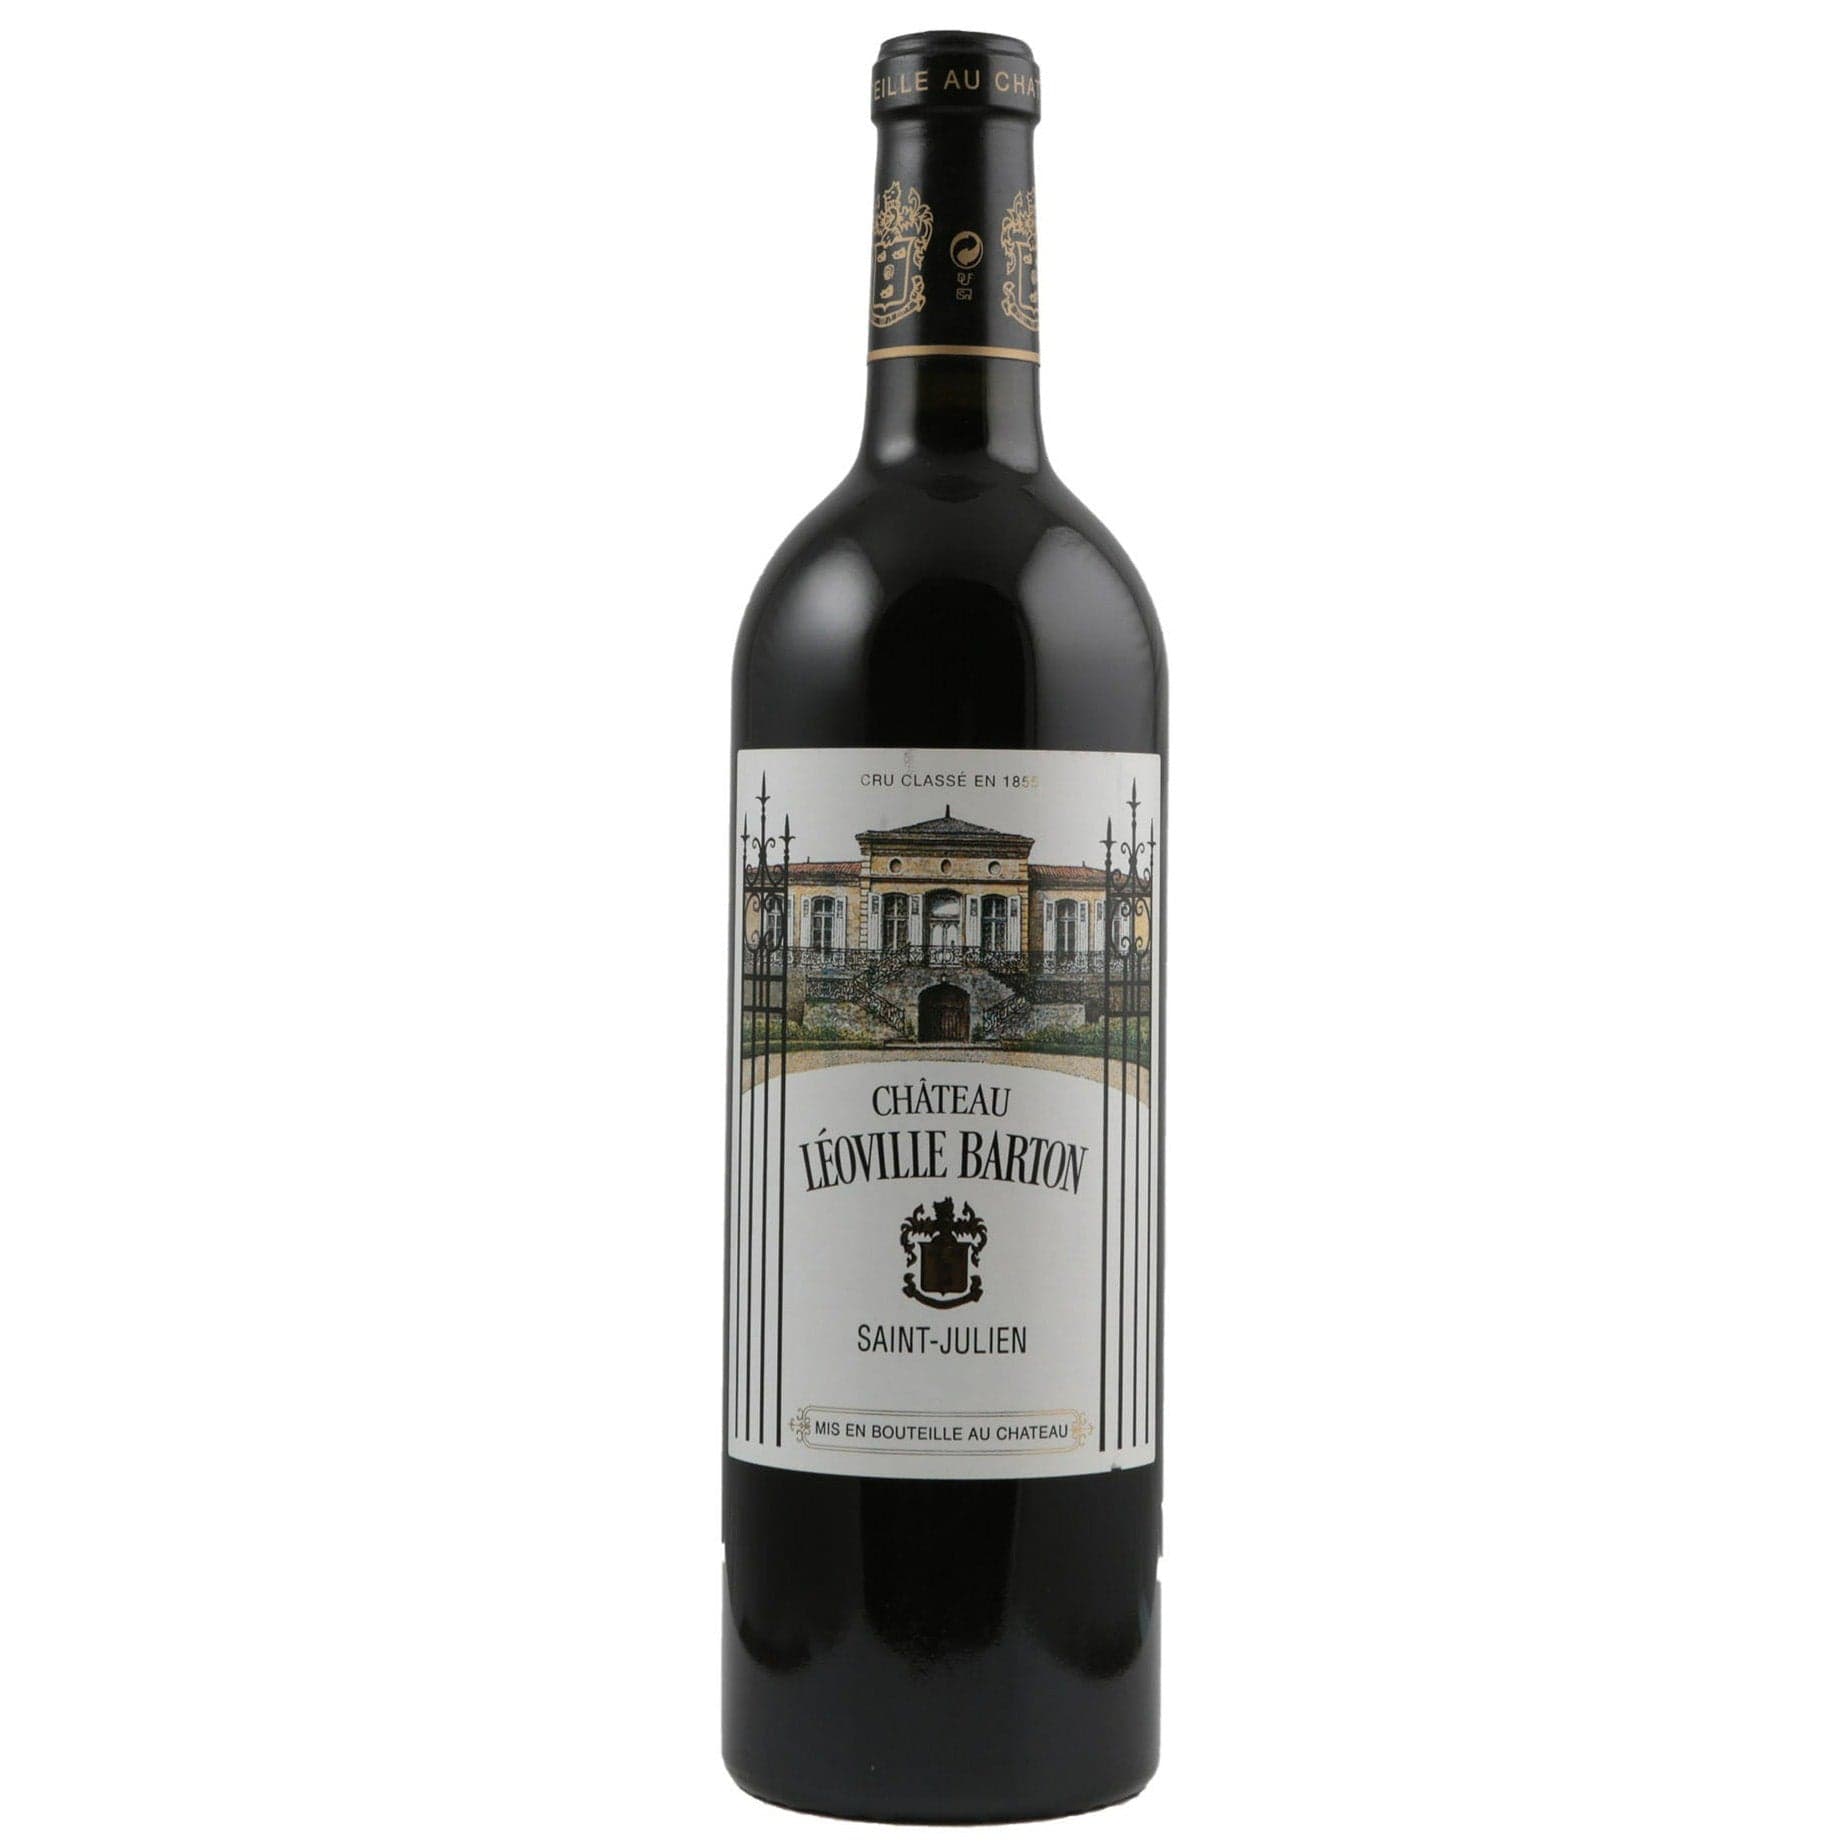 Single bottle of Red wine Ch. Leoville Barton, 2nd Growth Grand Cru Classe, Saint-Julien, 2000 74% Cabernet Sauvignon, 24% Merlot & 2% Cabernet Franc